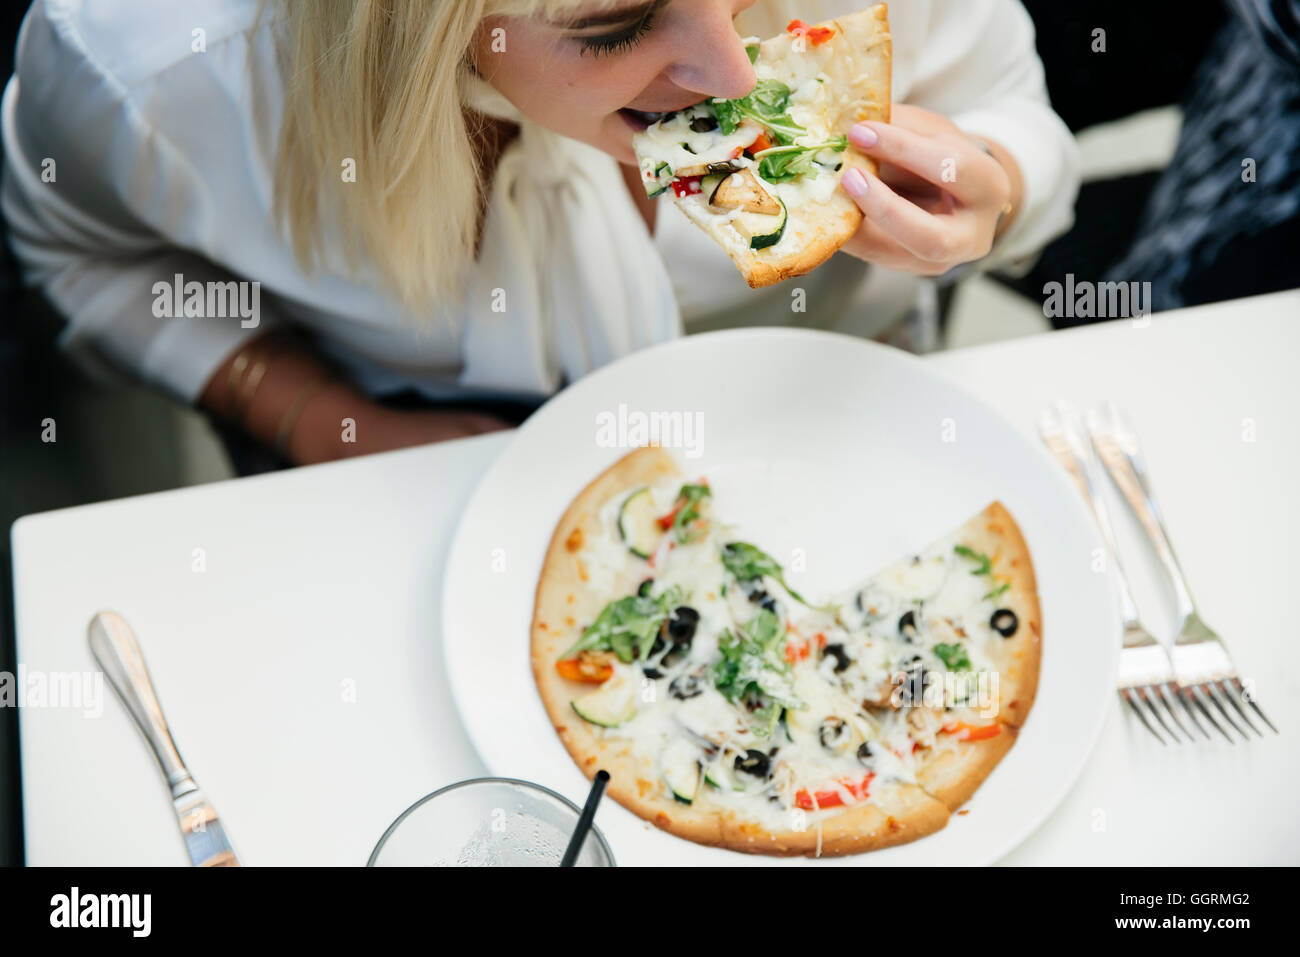 Caucasian woman eating Tranche de pizza in restaurant Banque D'Images